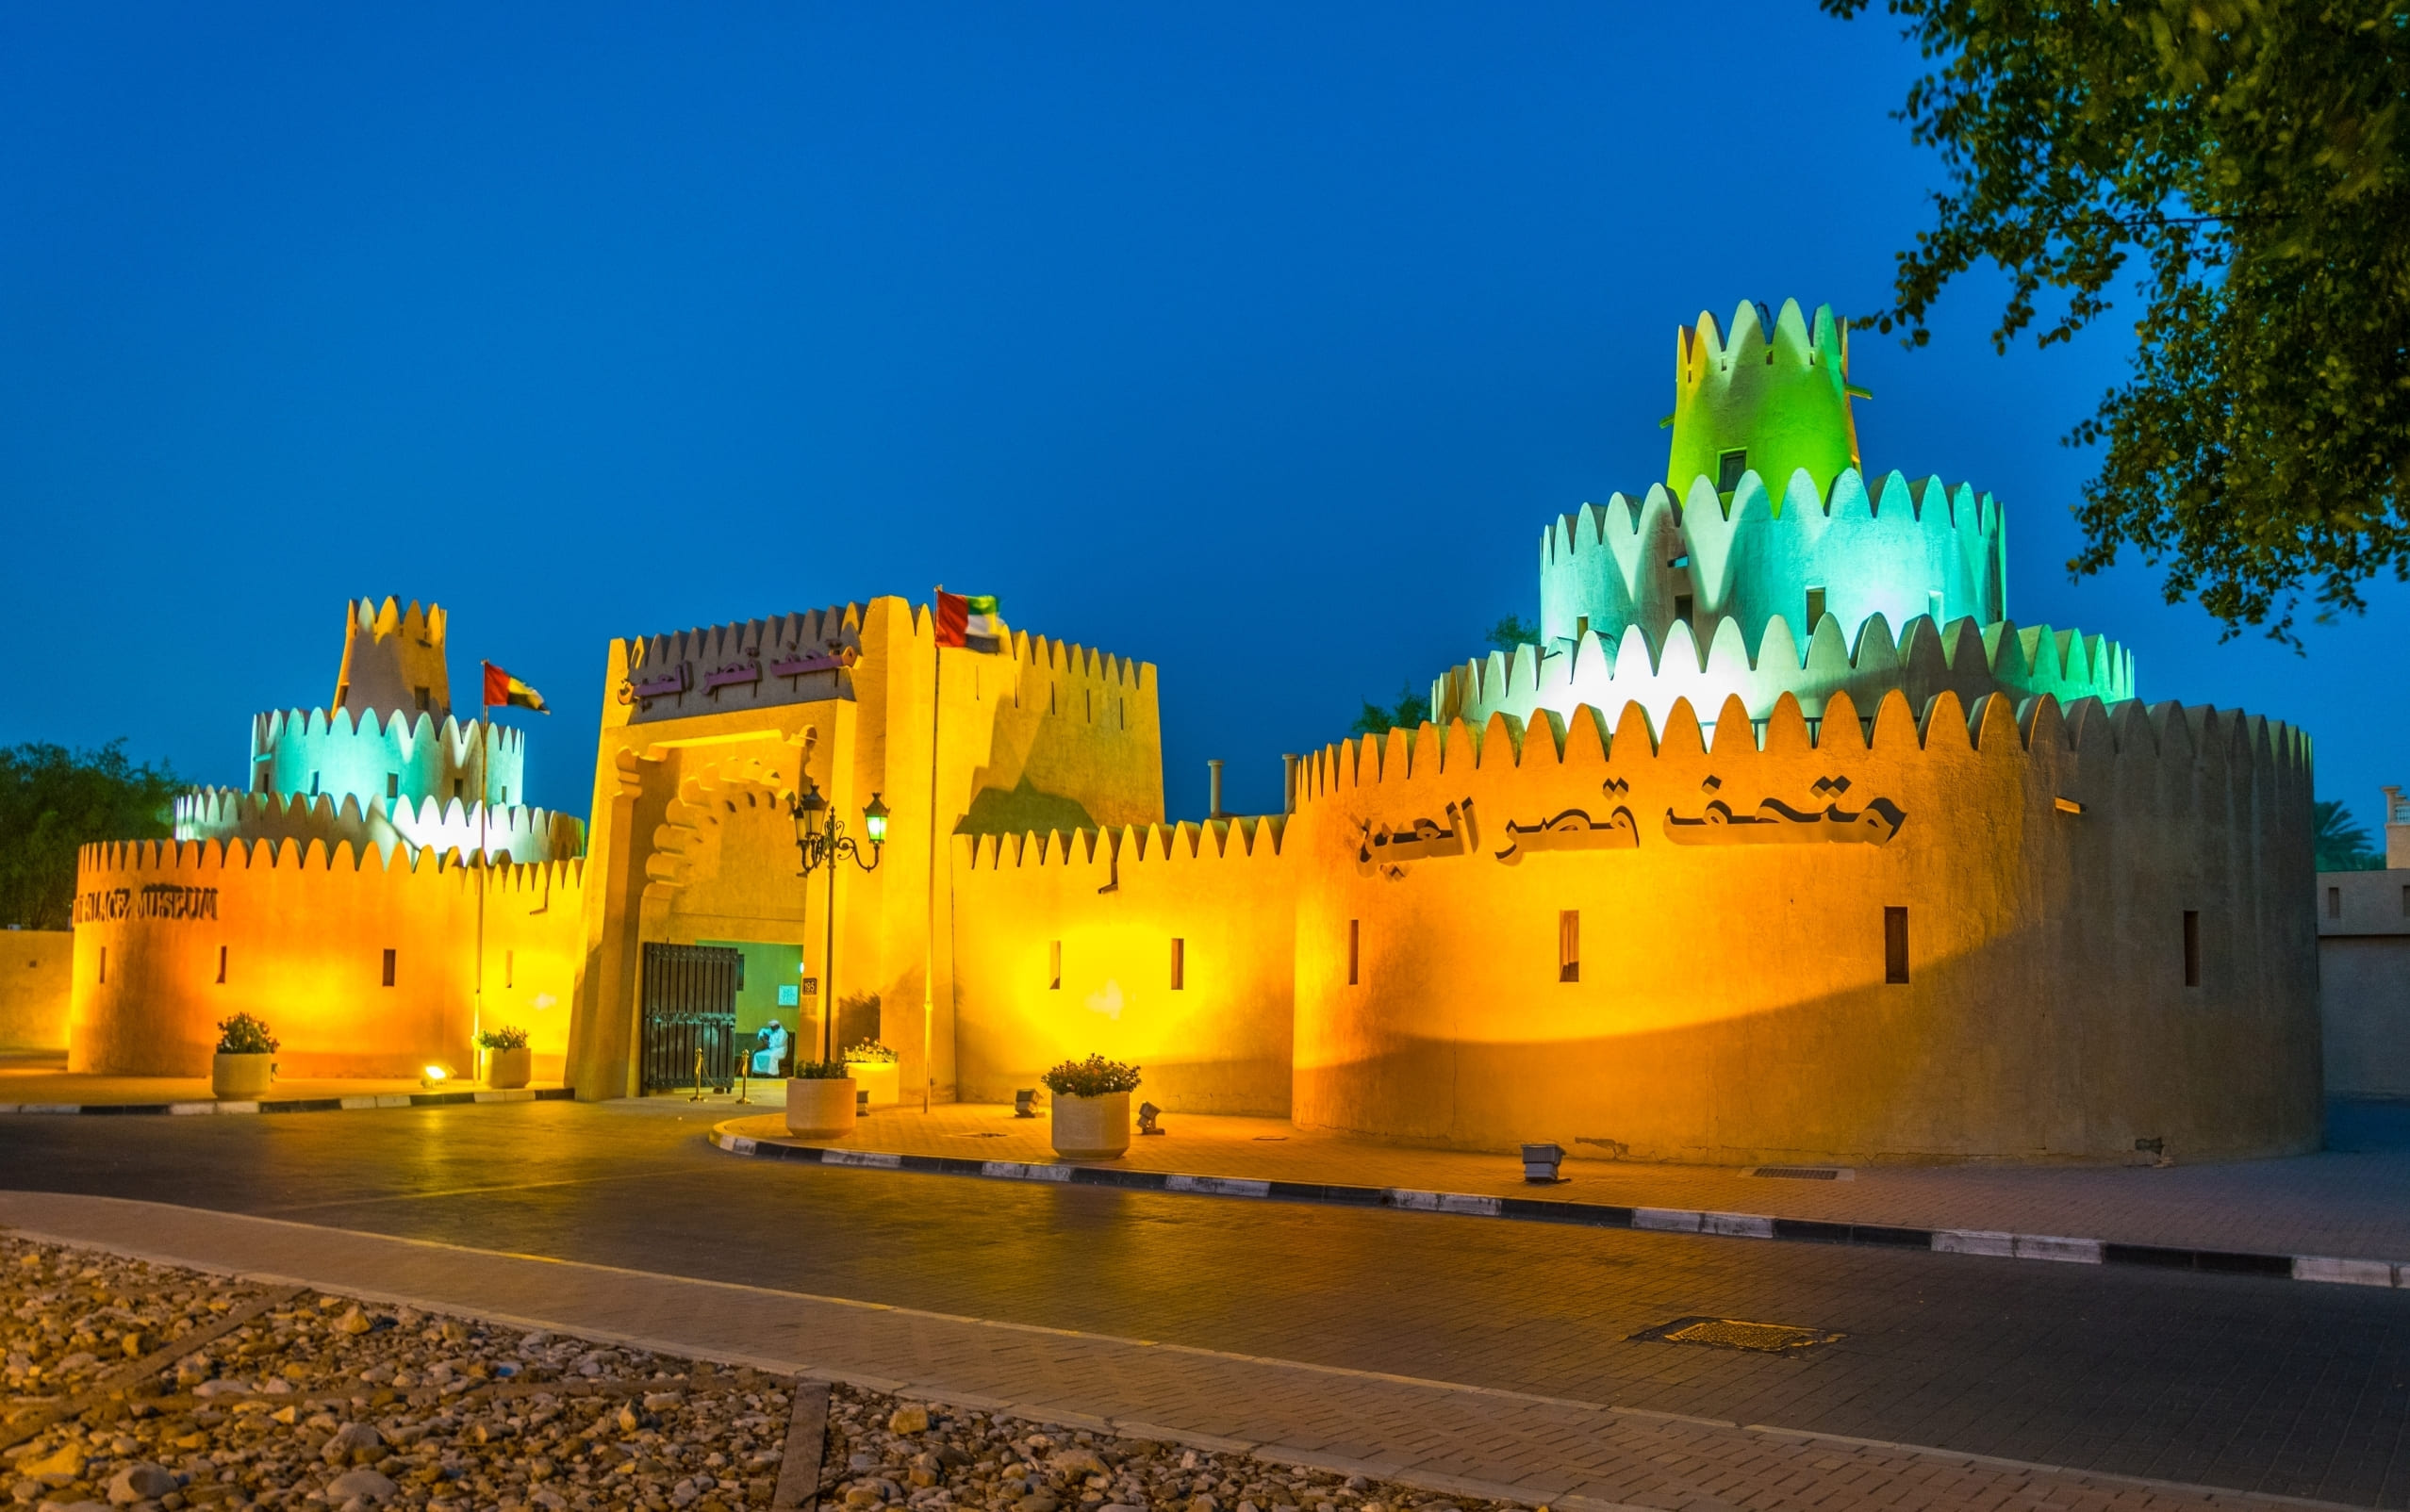 Tour Al Ain City Tour: A Full Day Tour From Dubai To Al Ain CIty